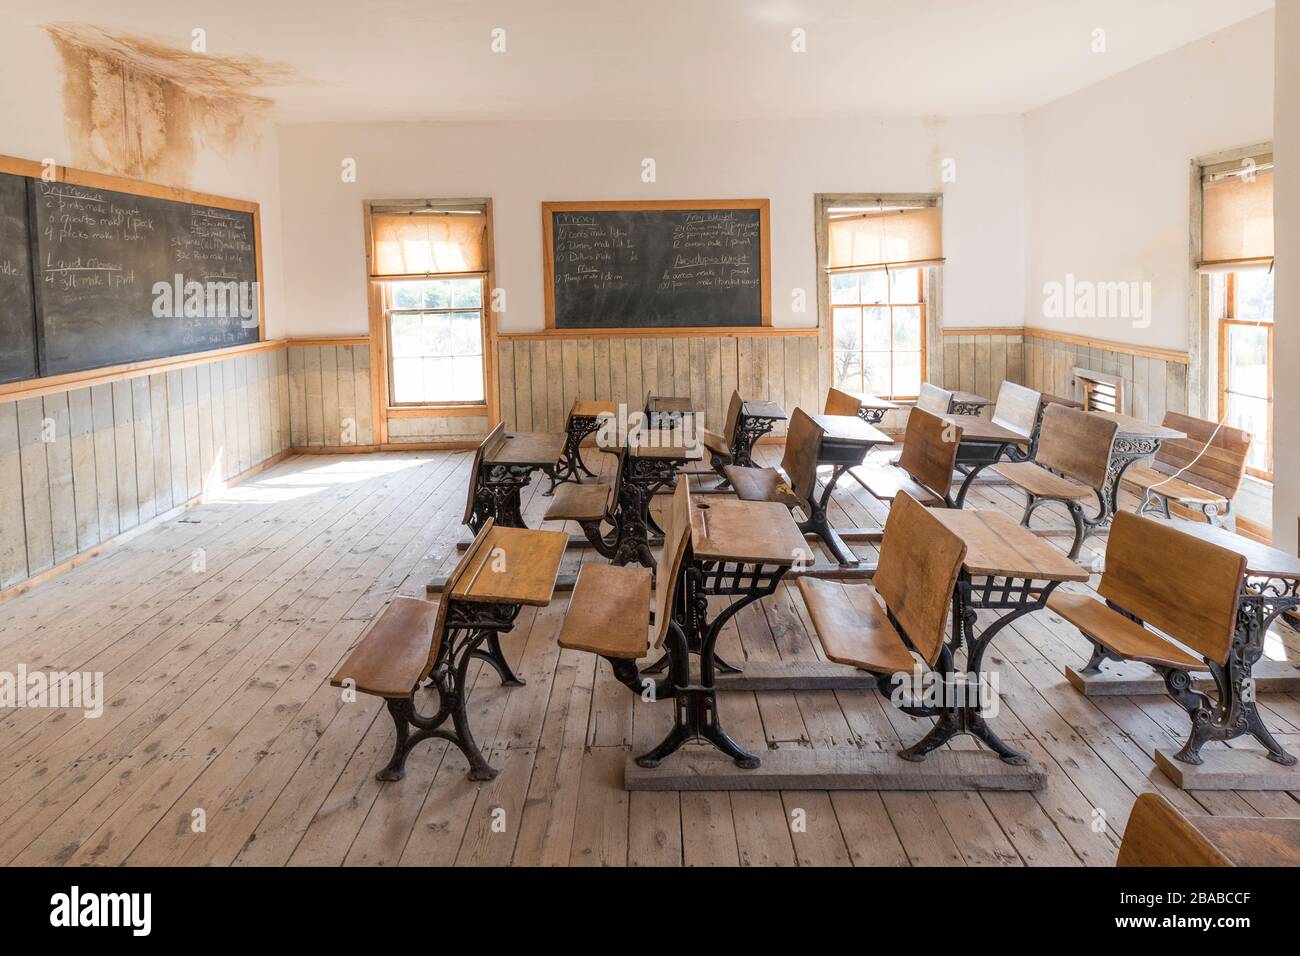 Schoolroom, Bannack ghost town, Montana, USA Stock Photo